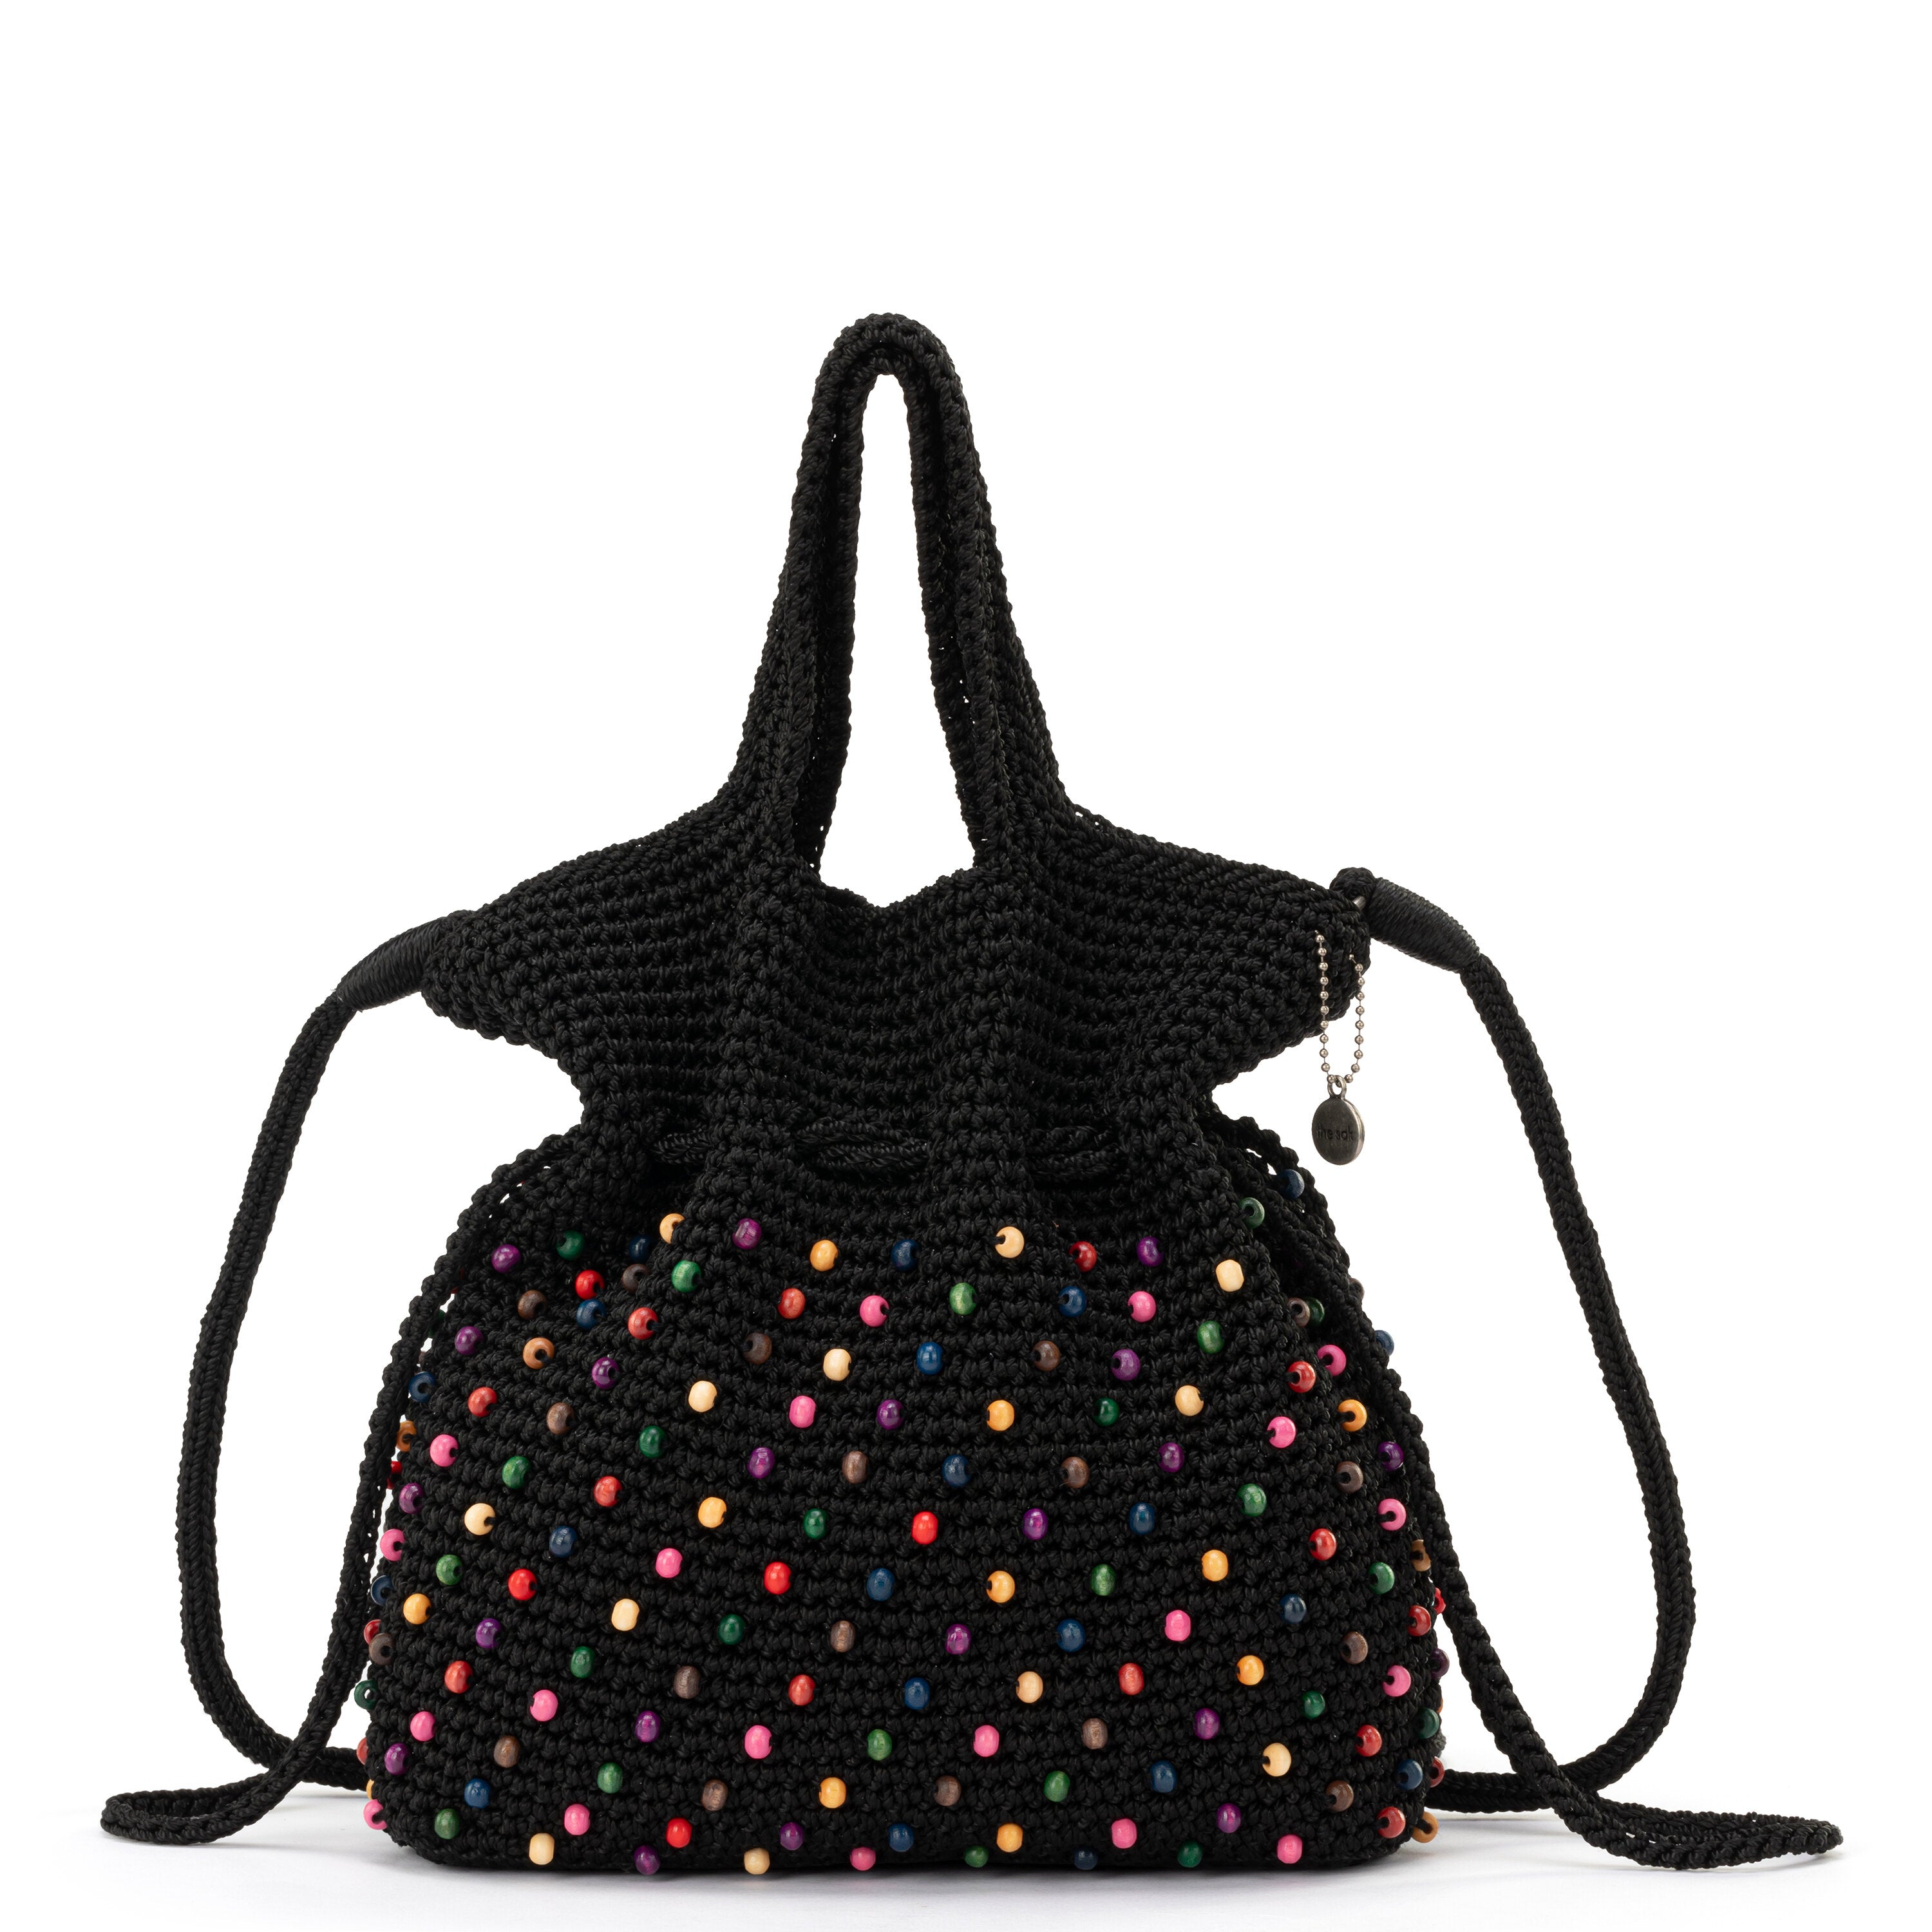 HOW to CROCHET LORRIE BAG - Easy Elegant Purse Tote Handbag by Naztazia -  YouTube